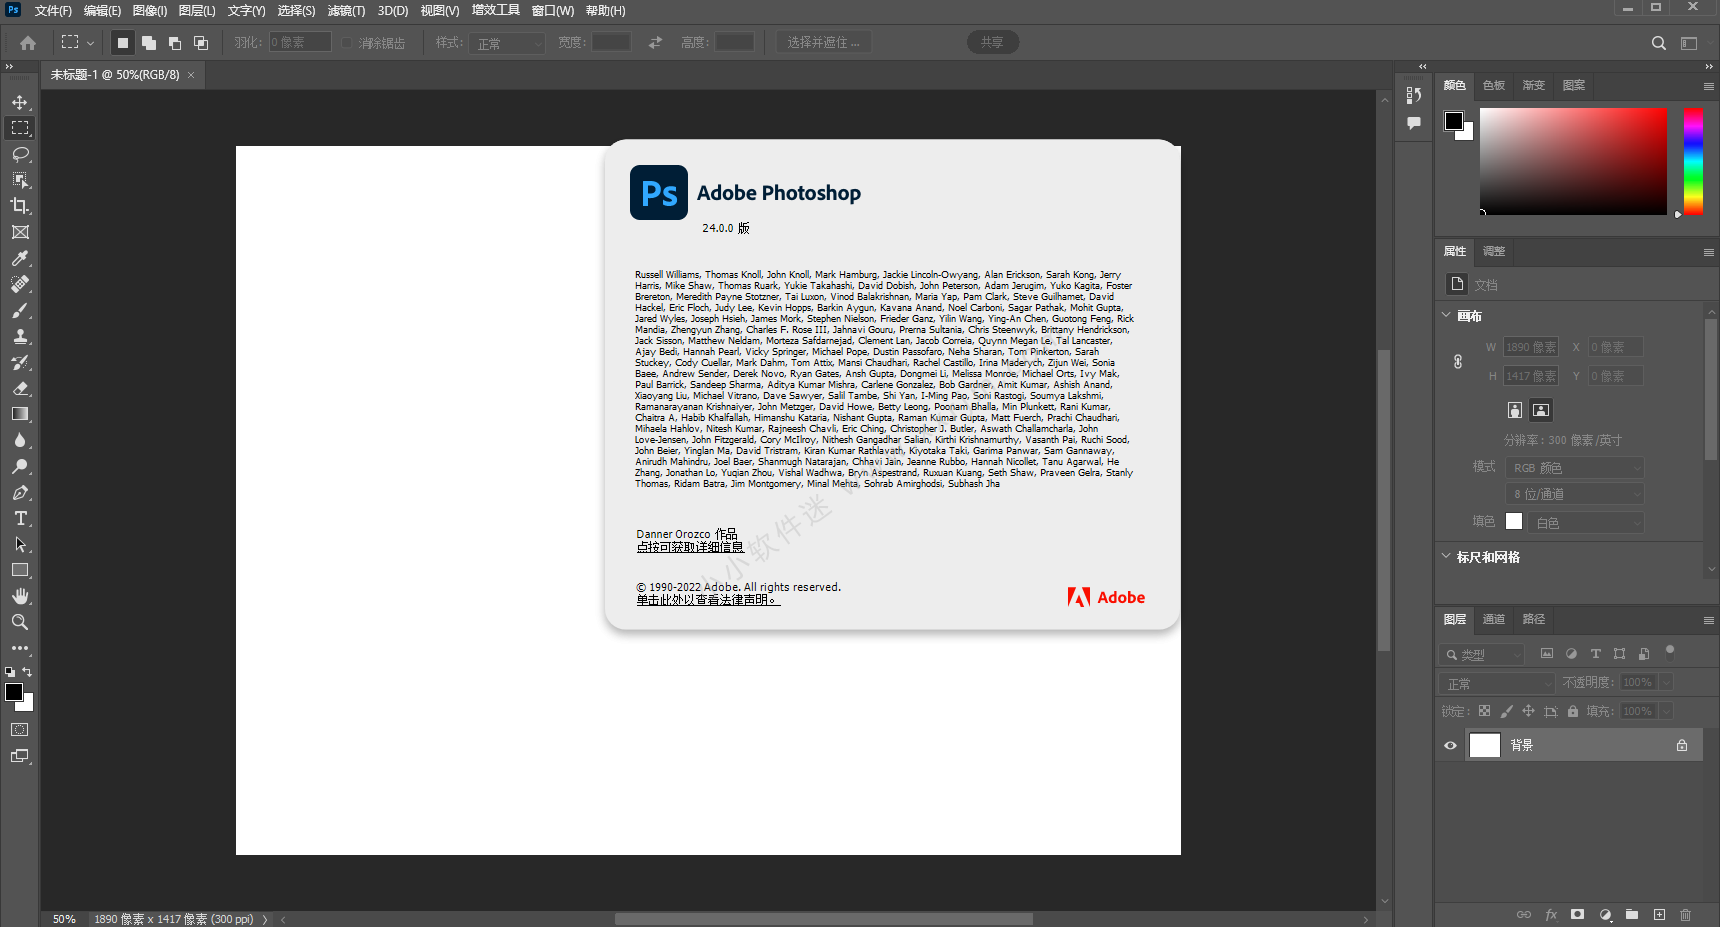 Adobe Photoshop 2023 v24.6.0.573 for mac download free